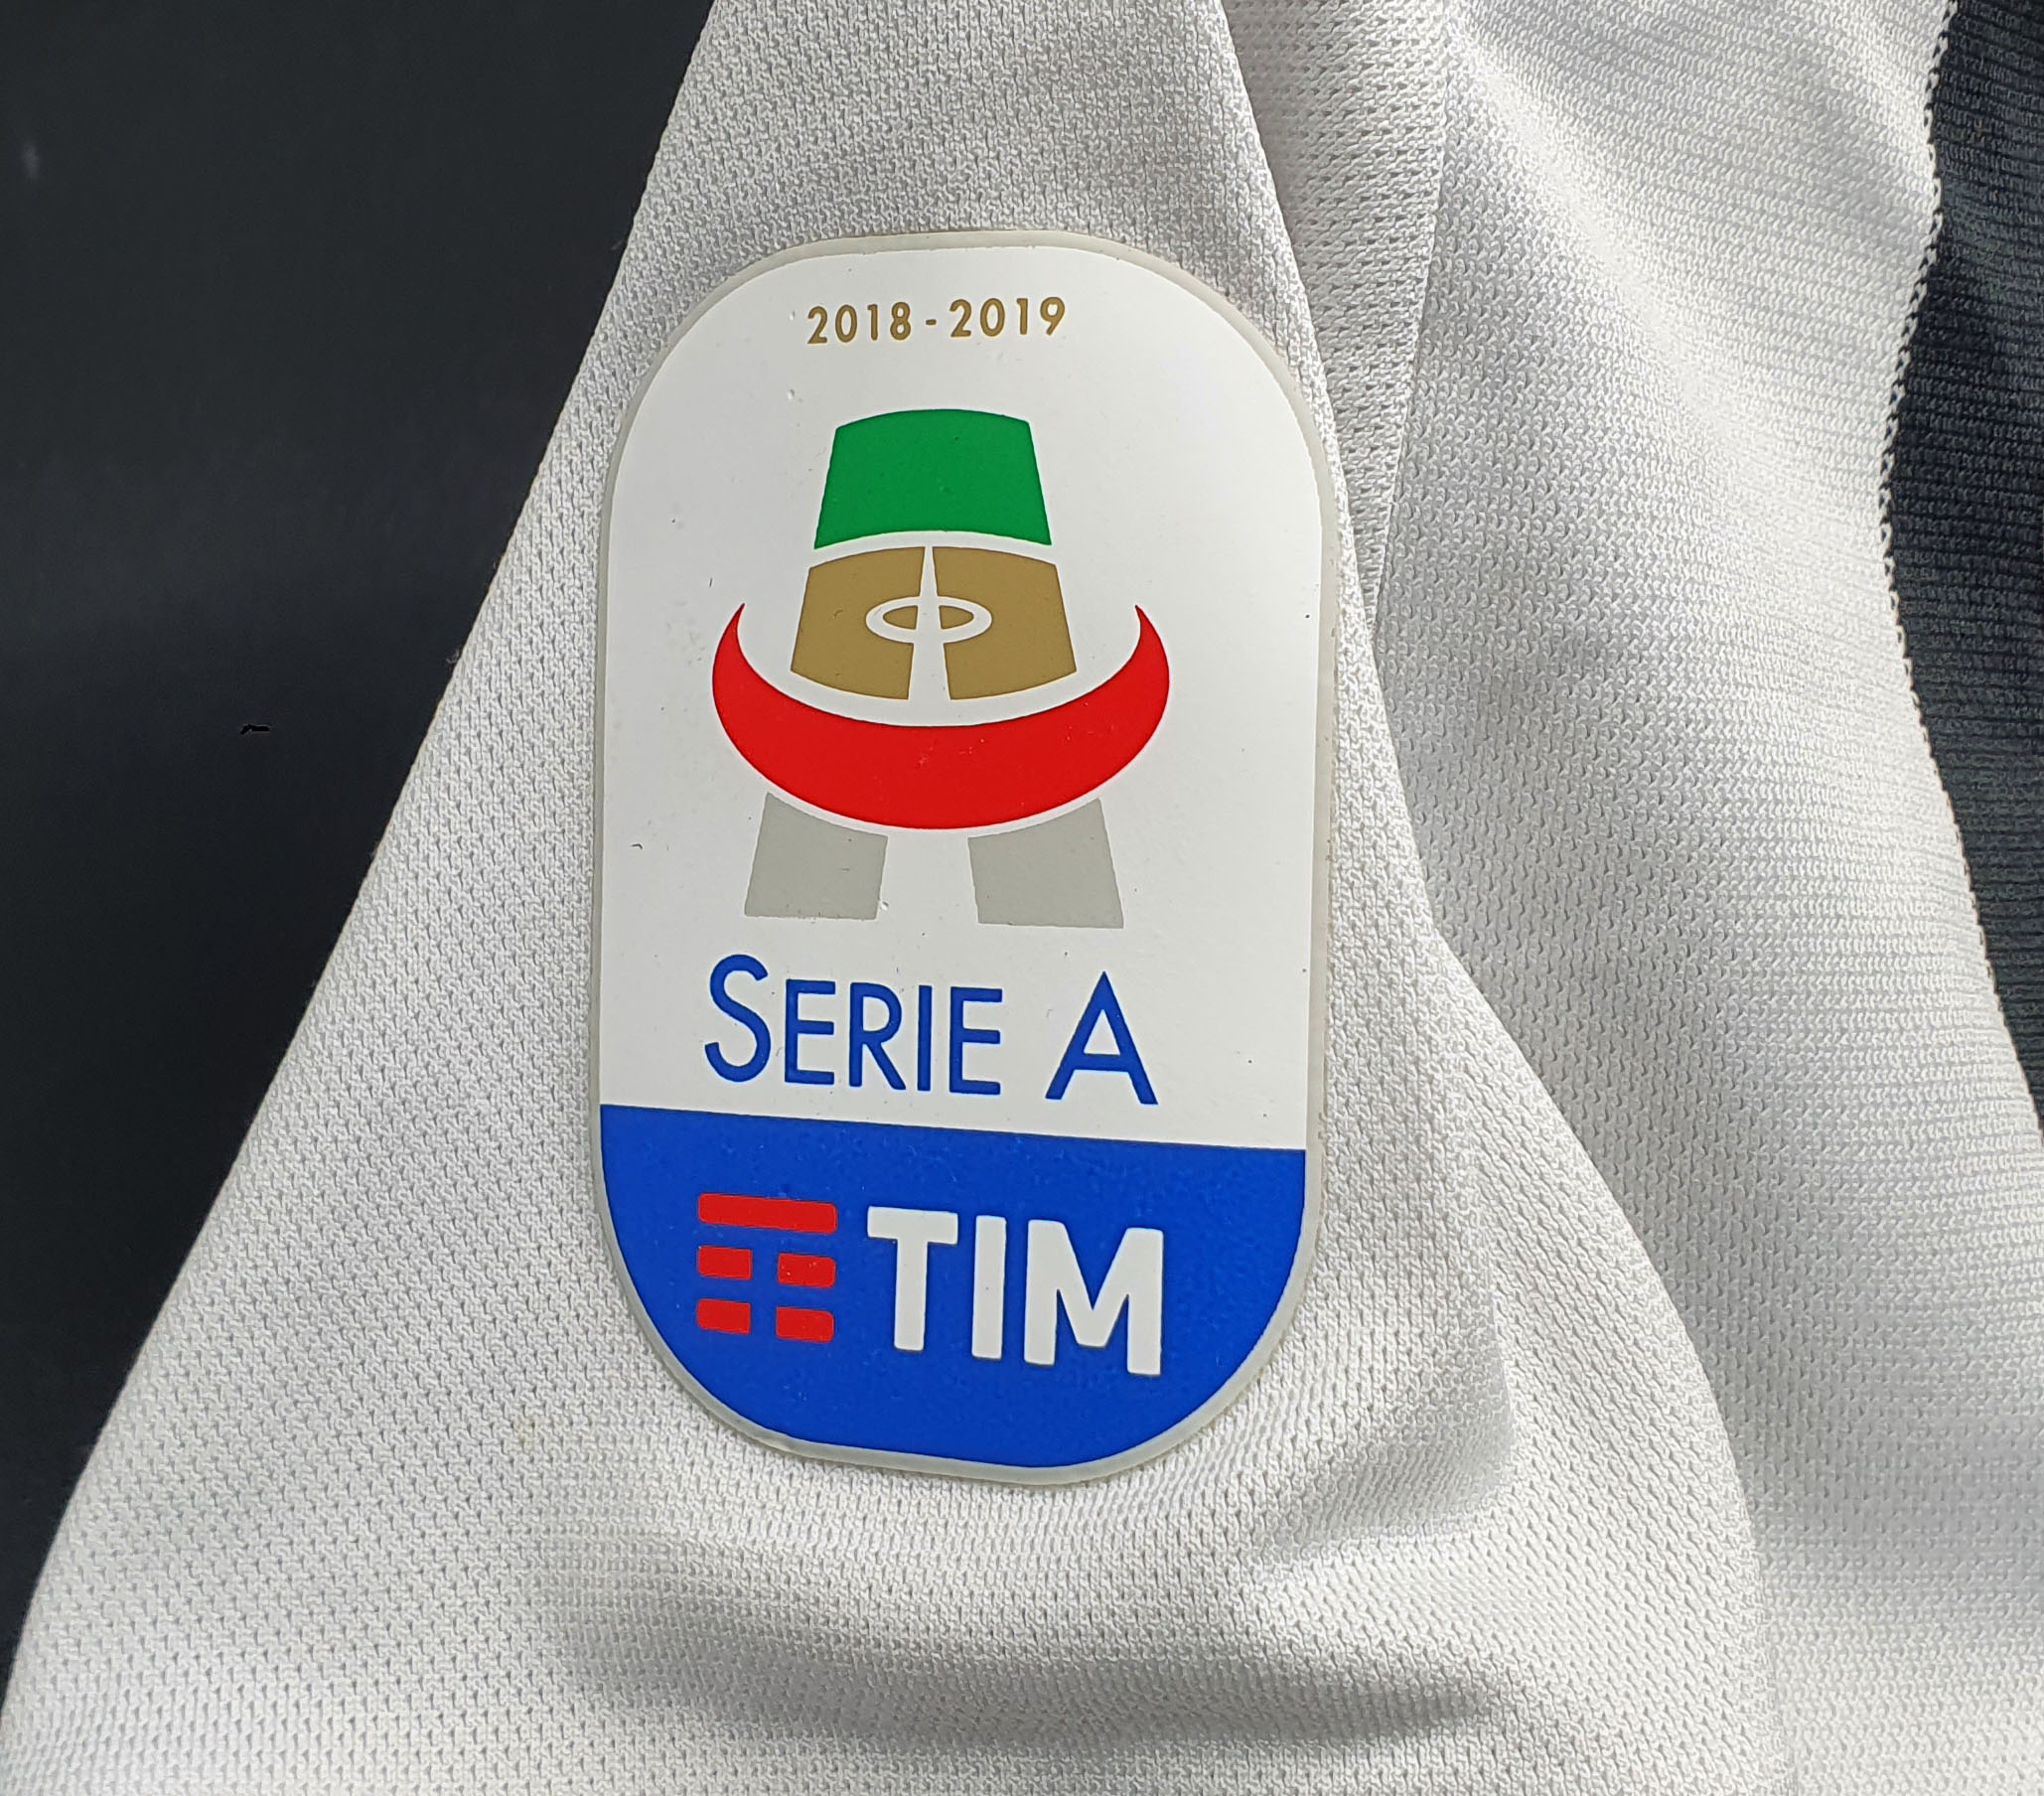 Juventus 2018-19 maglia Adidas Cristiano Ronaldo #7 third